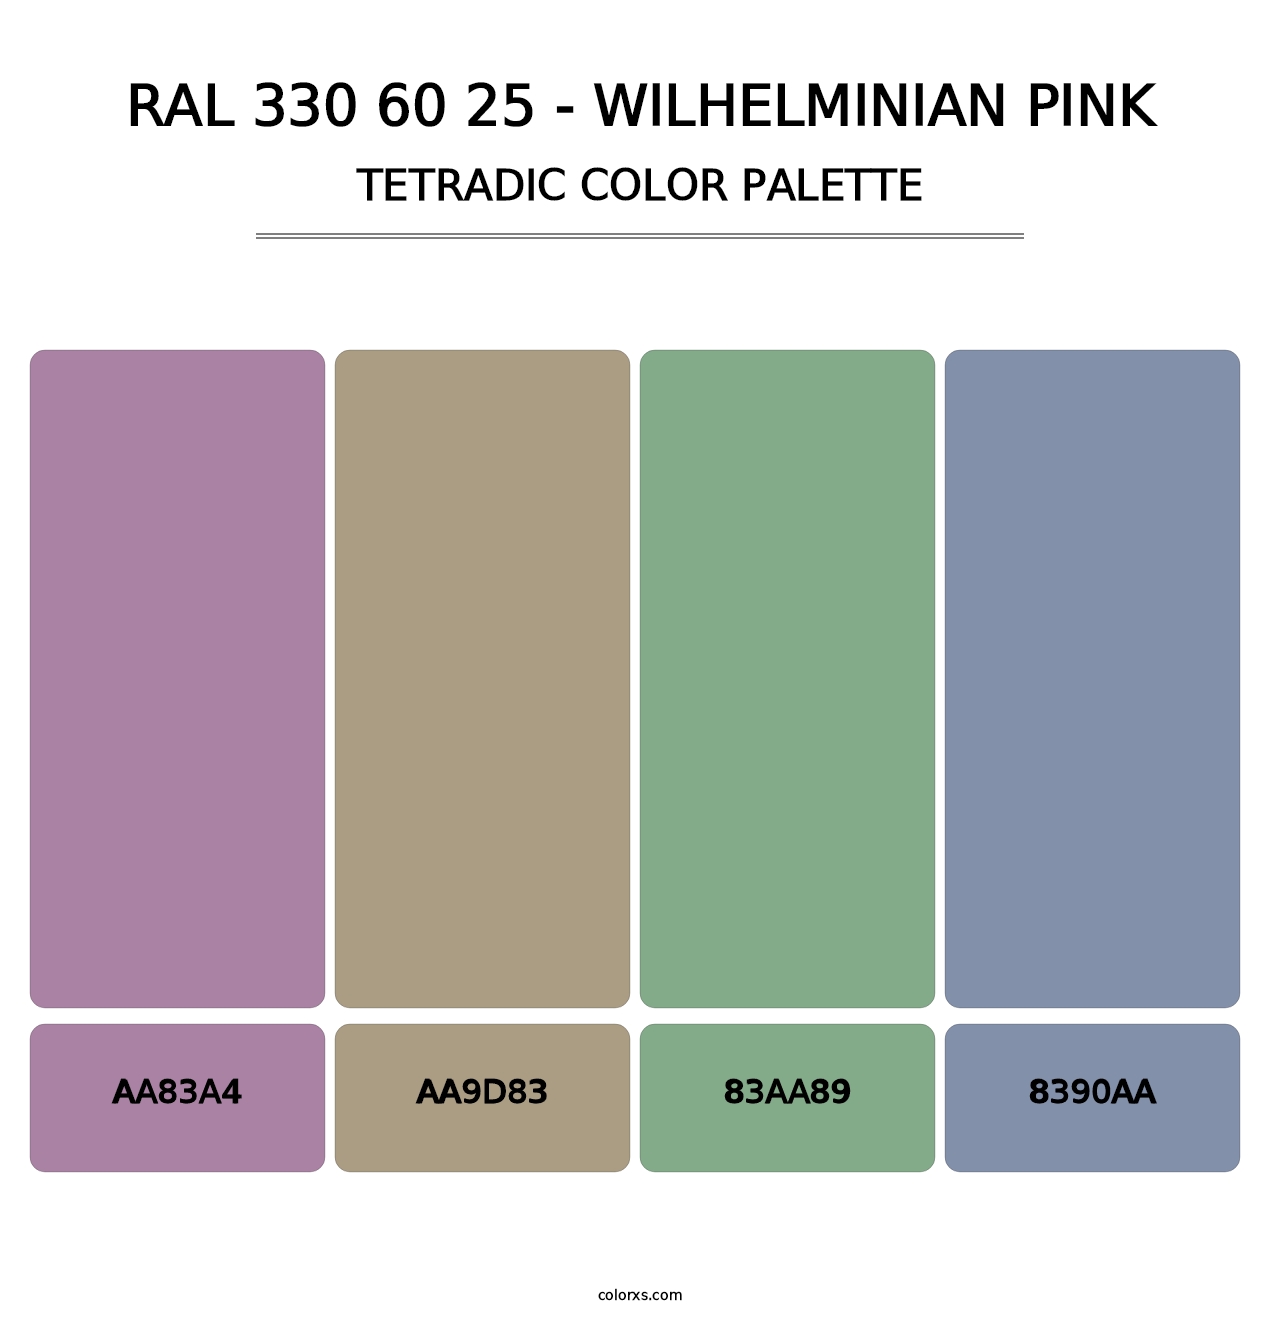 RAL 330 60 25 - Wilhelminian Pink - Tetradic Color Palette